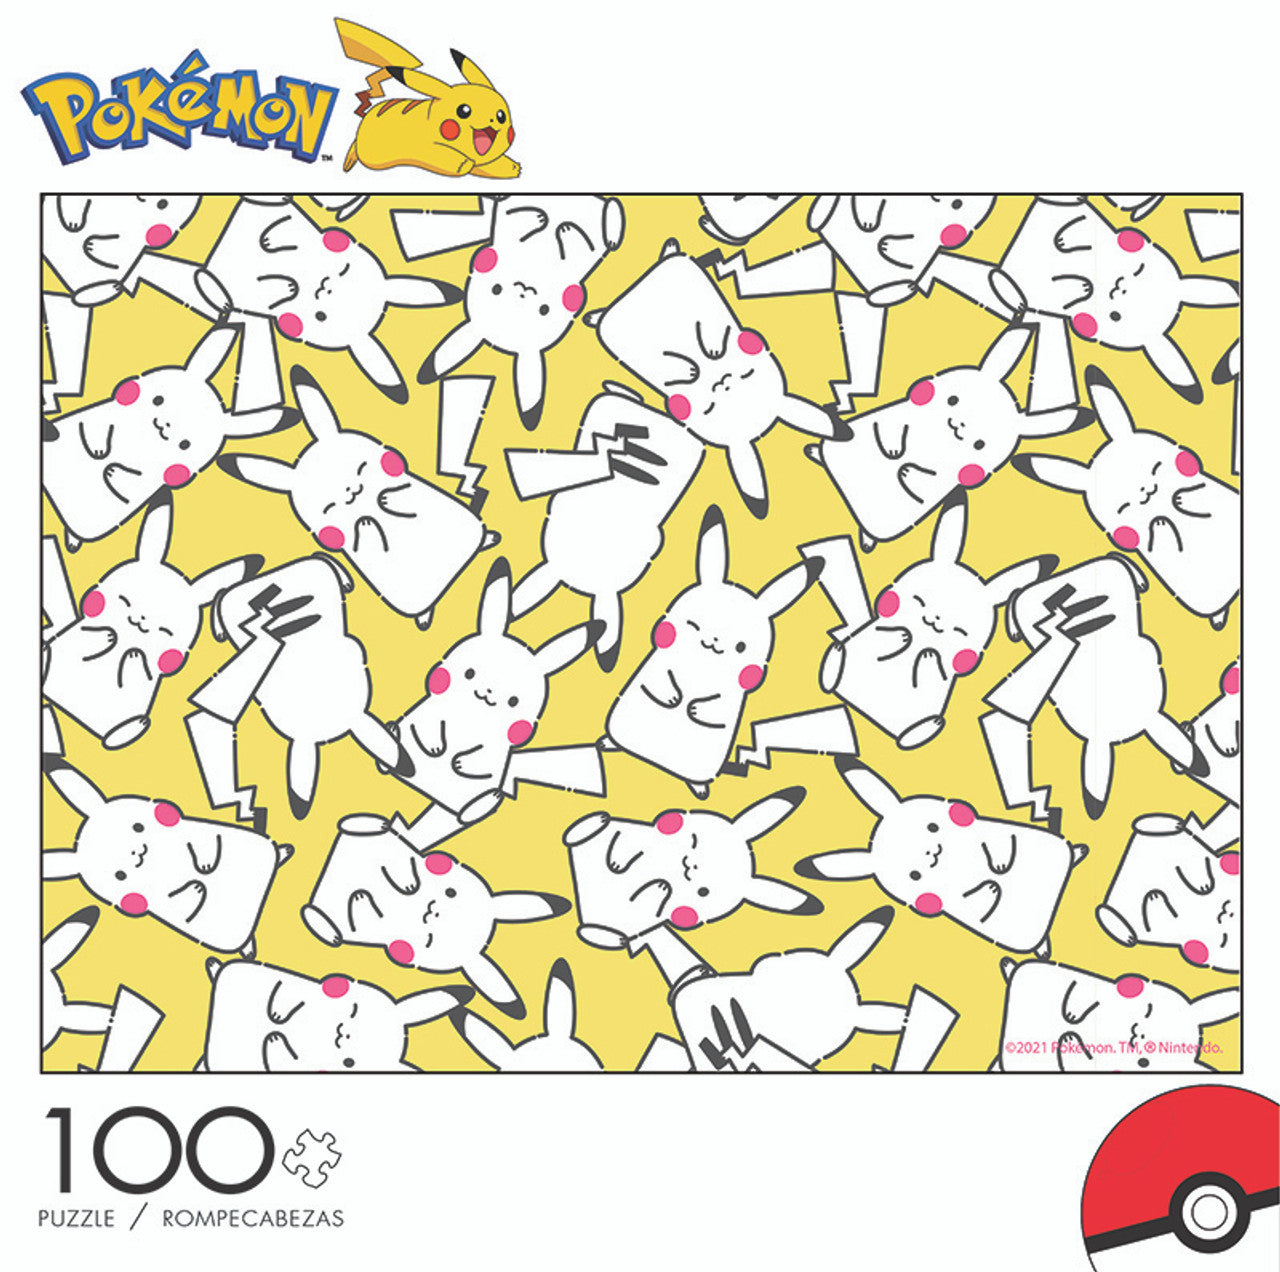 Pokémon Celebration - 100 Piece Puzzle